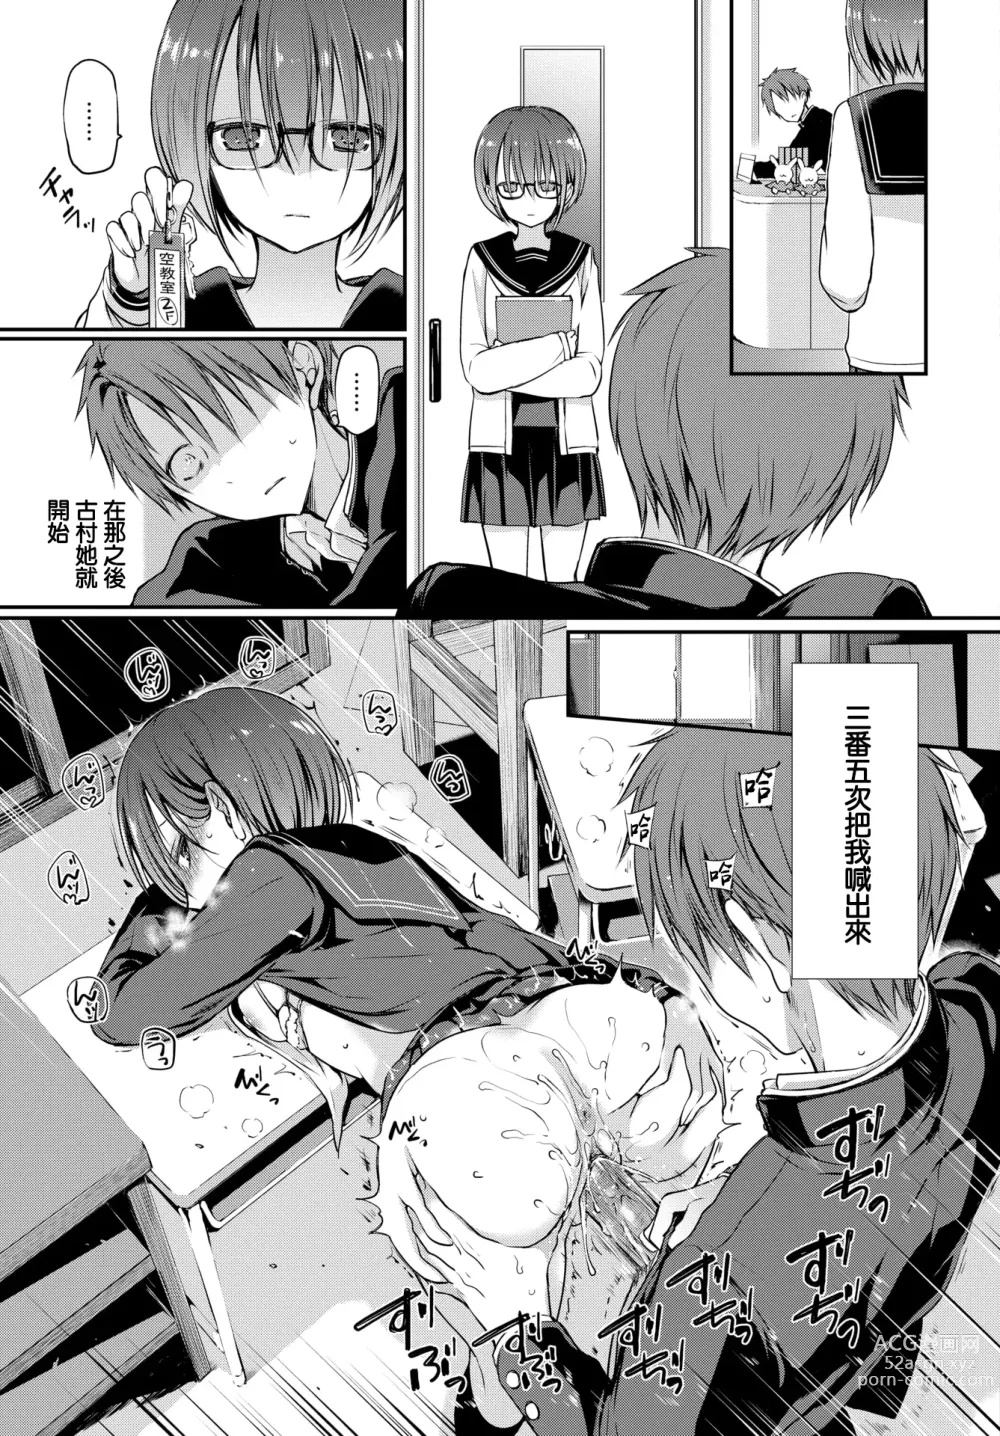 Page 19 of manga Kimi ga, Ii. (uncensored)